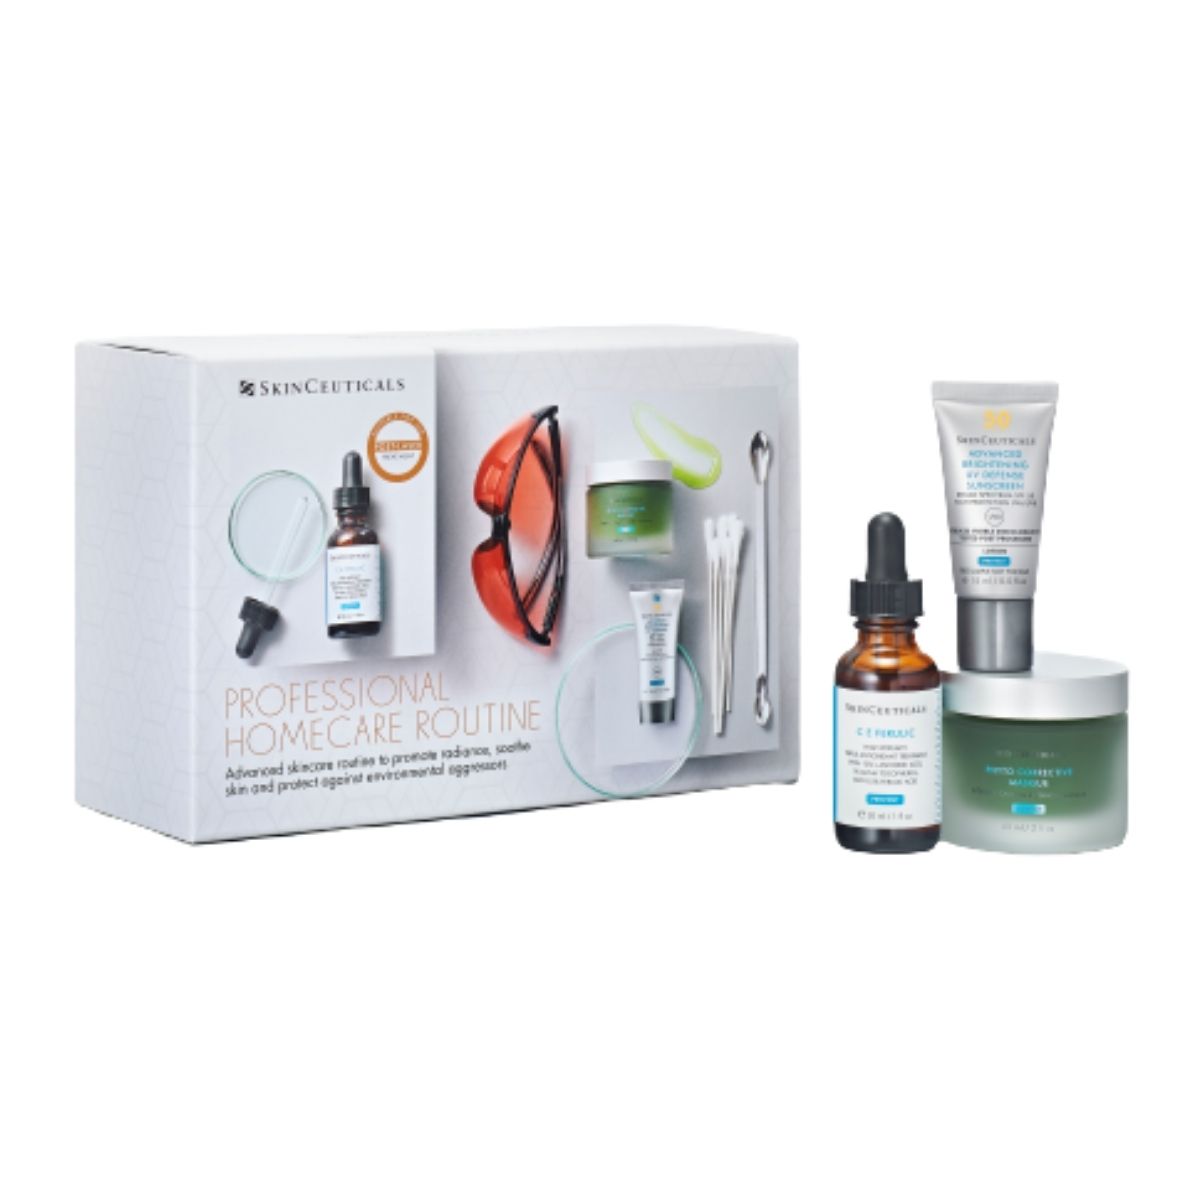 SkinCeuticals Homecare Routine Kit 1.